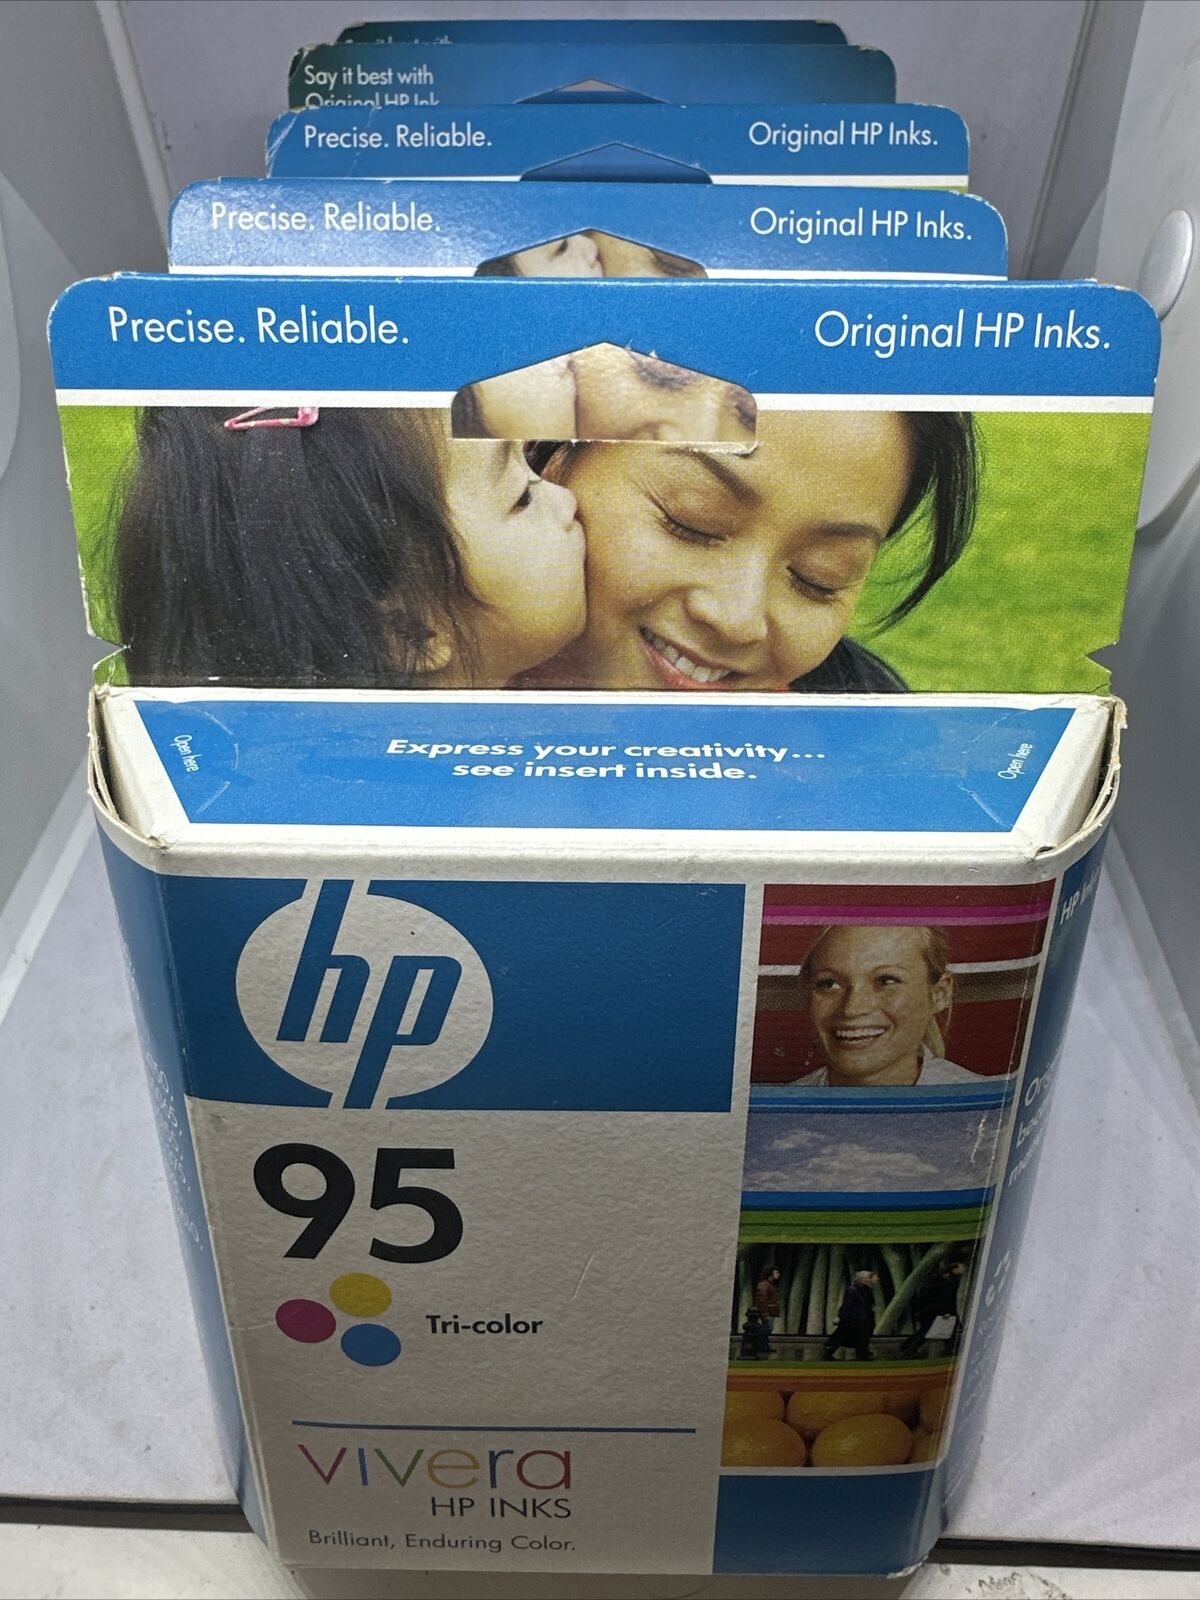 HP 95 Tri-Color Vivera HP Inkjet Print Cartridges (1 Lot Of 5) Genuine HP Carts